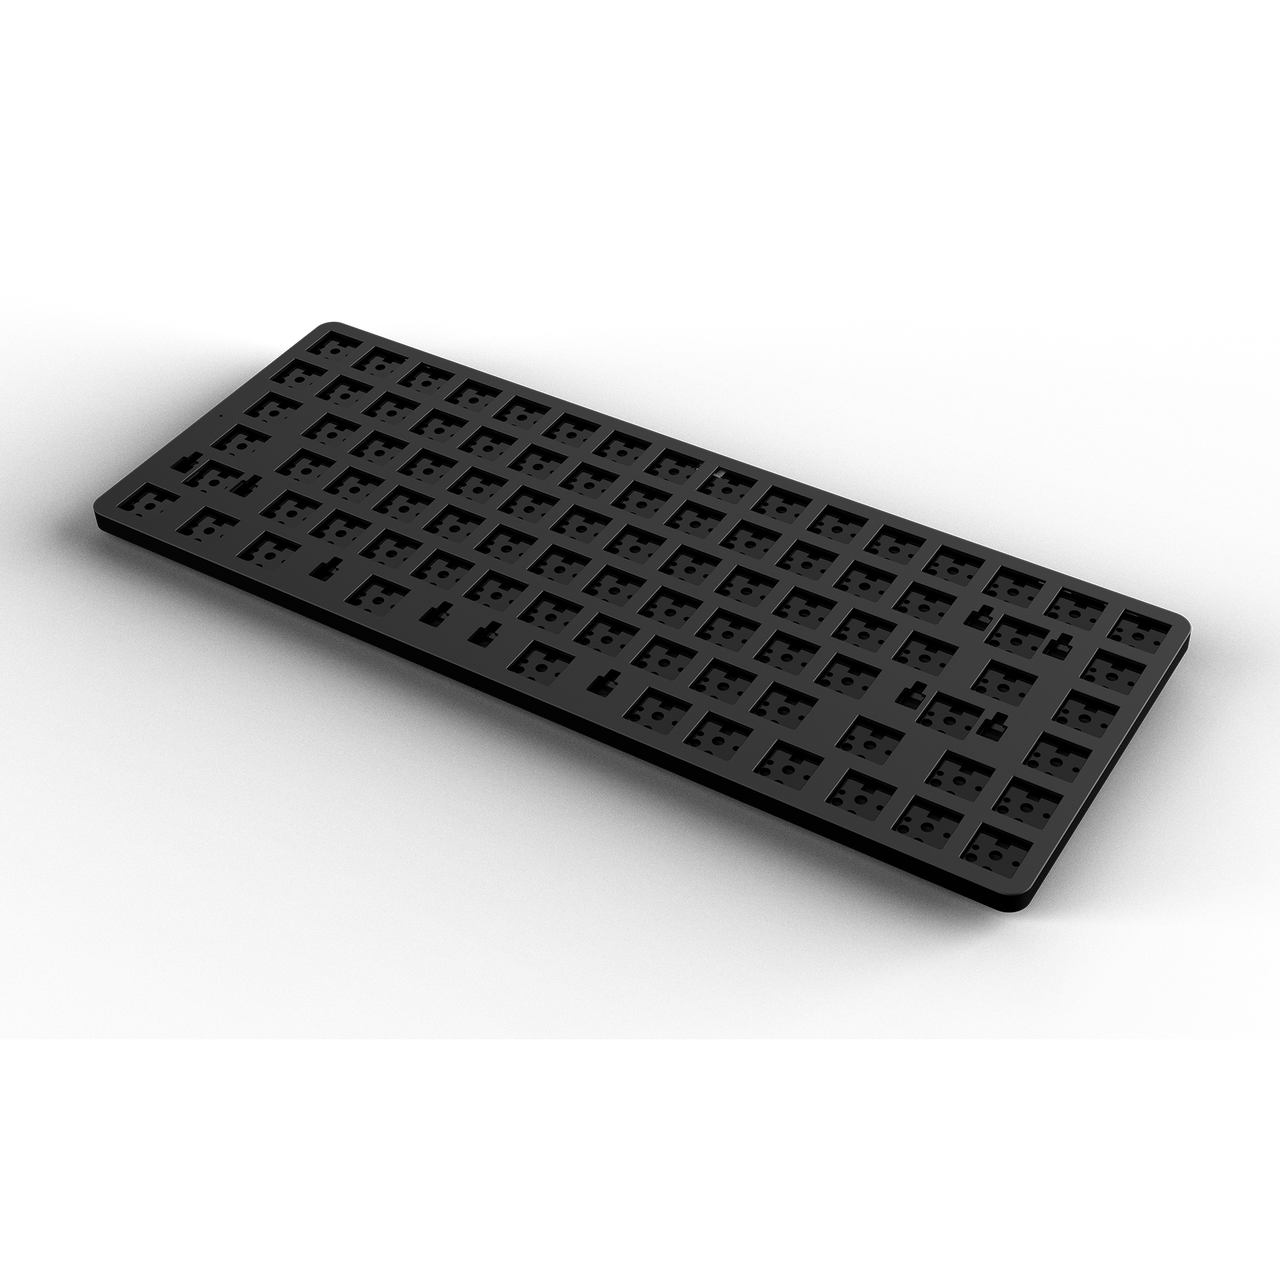 Chosfox® Custom Keyboard Kit: Uniquely Designed, Quality, Great Value